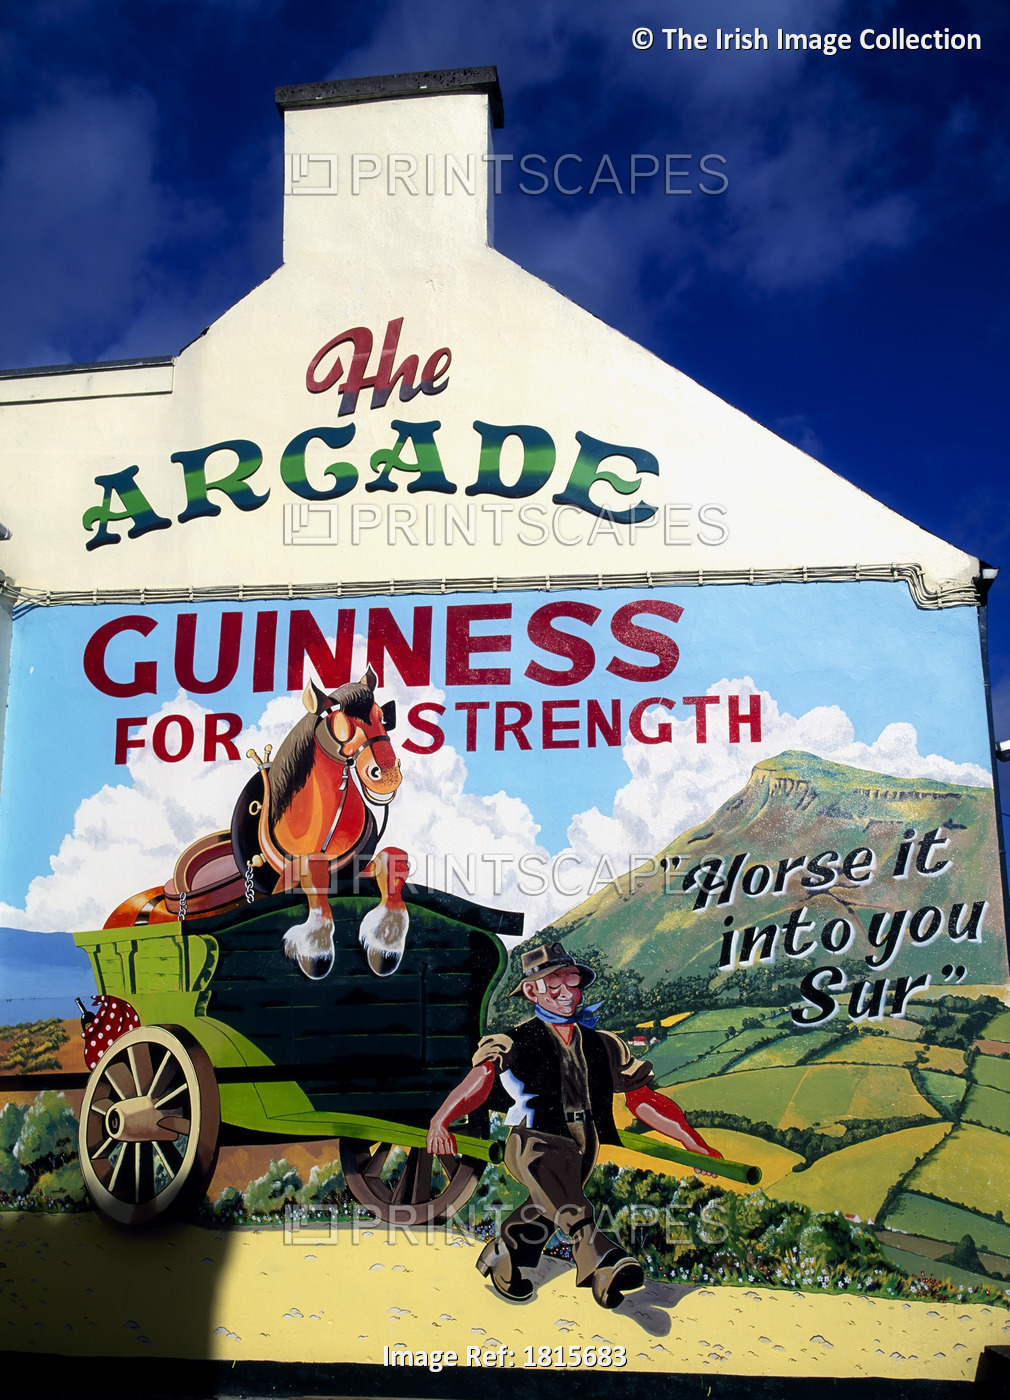 The Arcade, Dungiven, Co Derry, Ireland